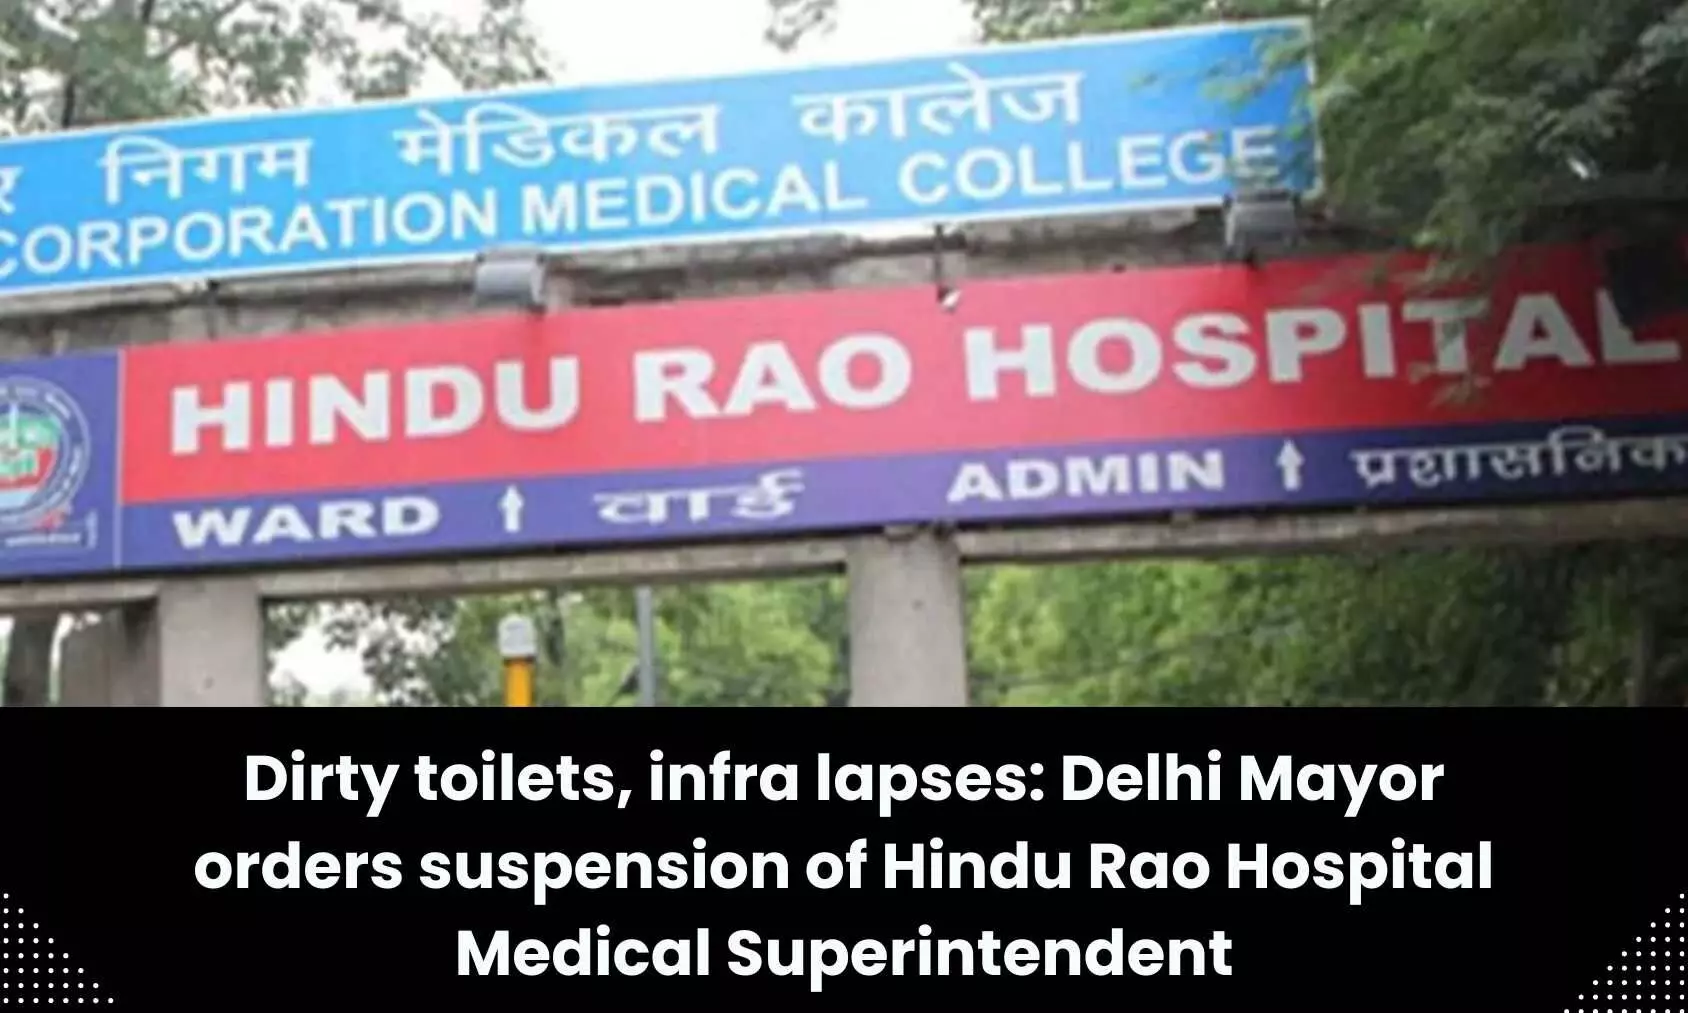 Delhi Mayor orders suspension of medical superintendent of Hindu Rao Hospital over alleged infrastructural irregularities